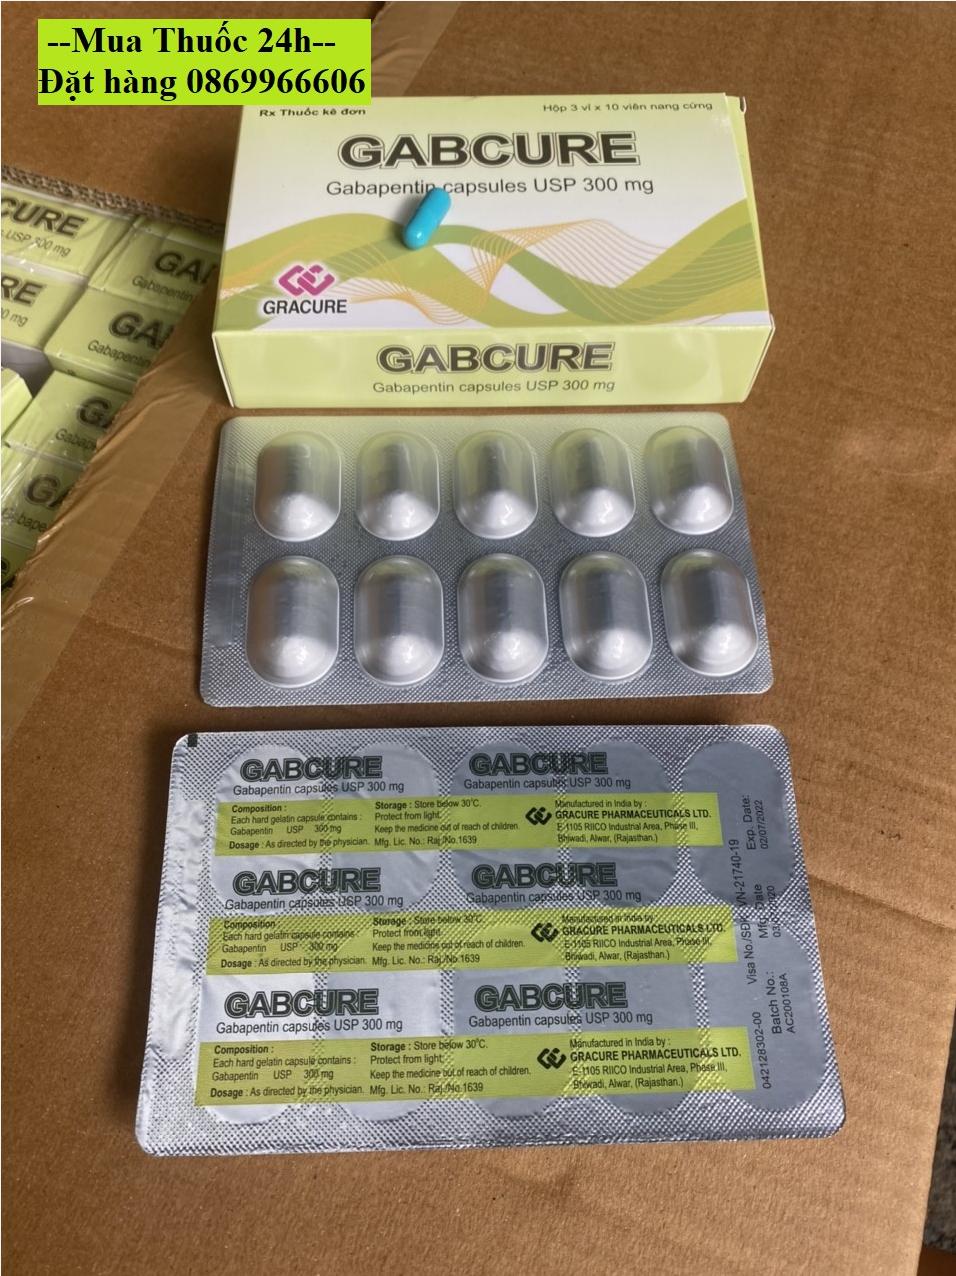 Thuốc Gabcure (Gabapentin) giá bao nhiêu mua ở đâu?